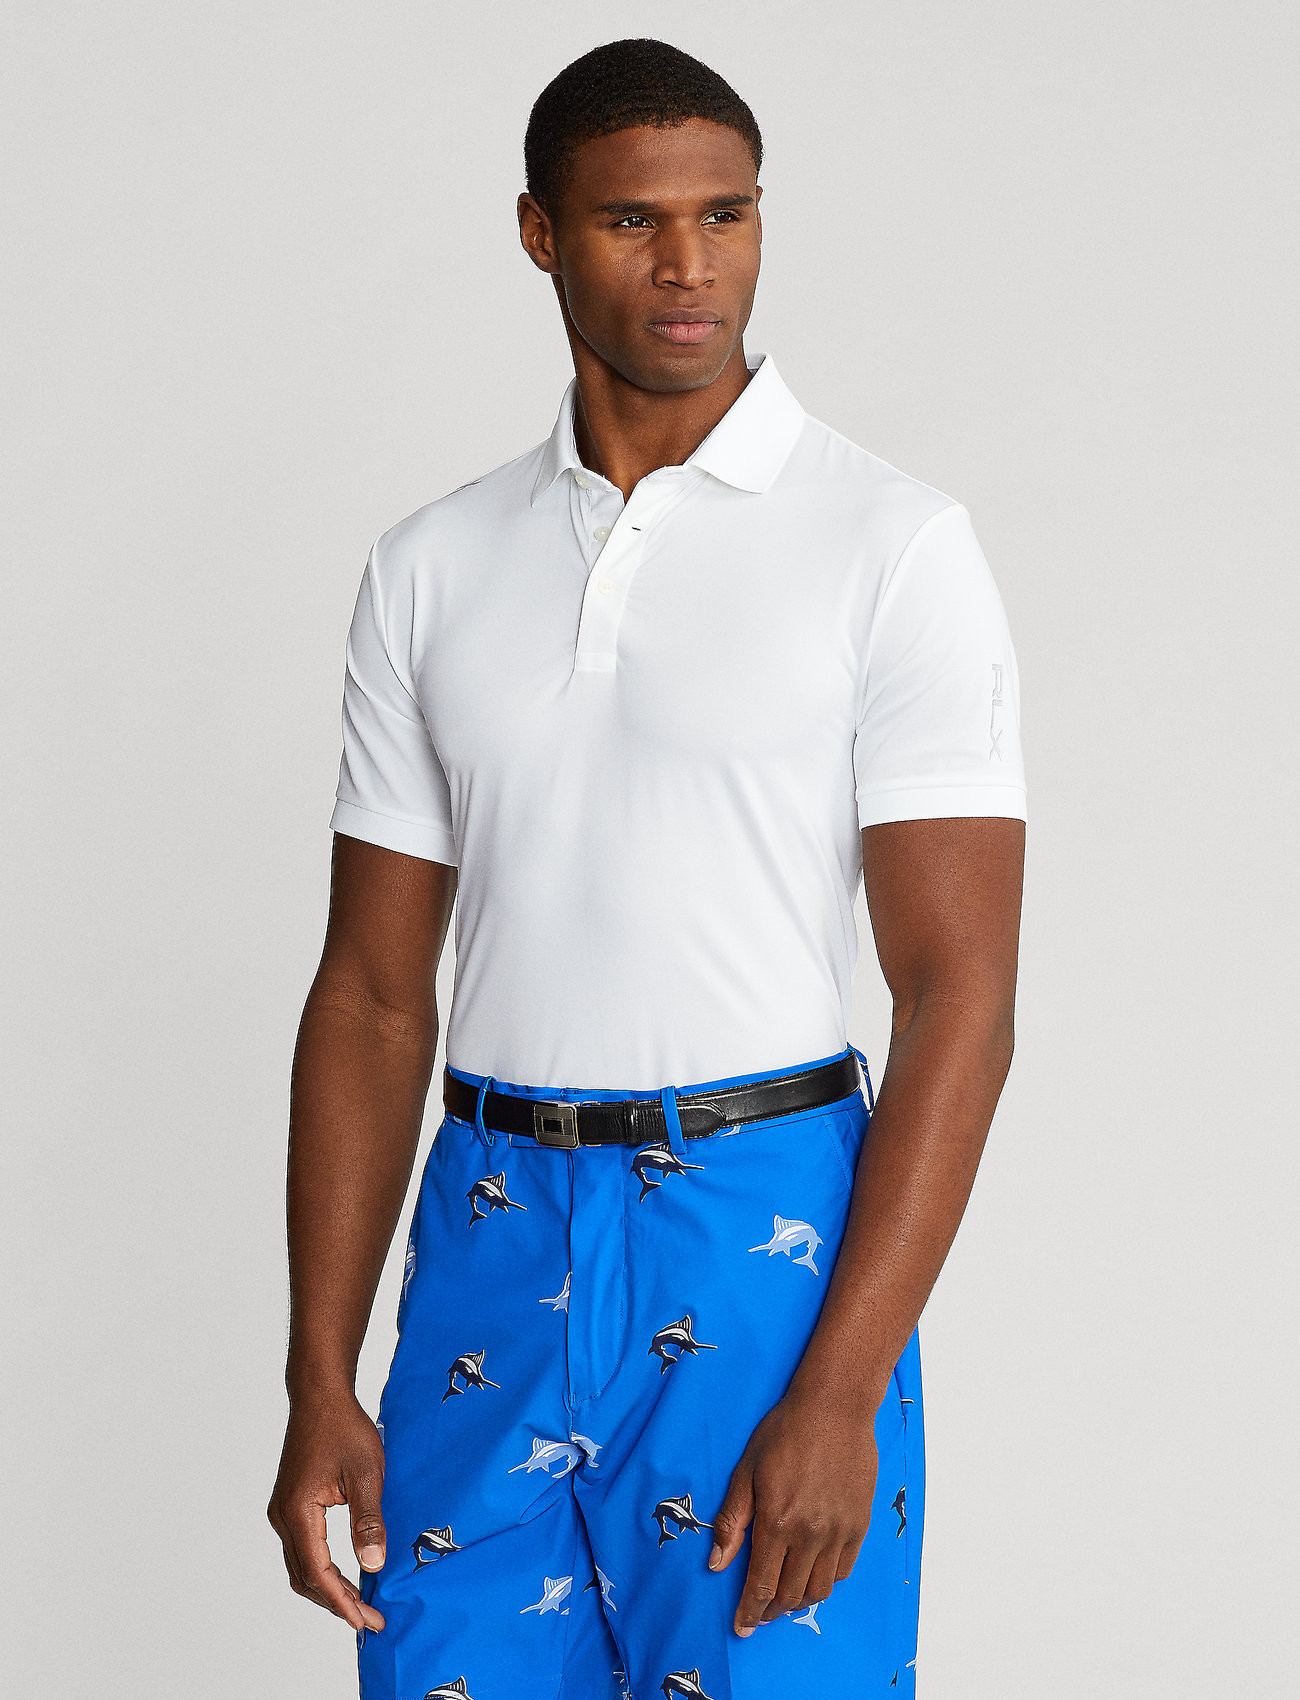 Ralph Lauren Golf Custom Slim Fit Performance Polo Shirt - Short-sleeved  polos 